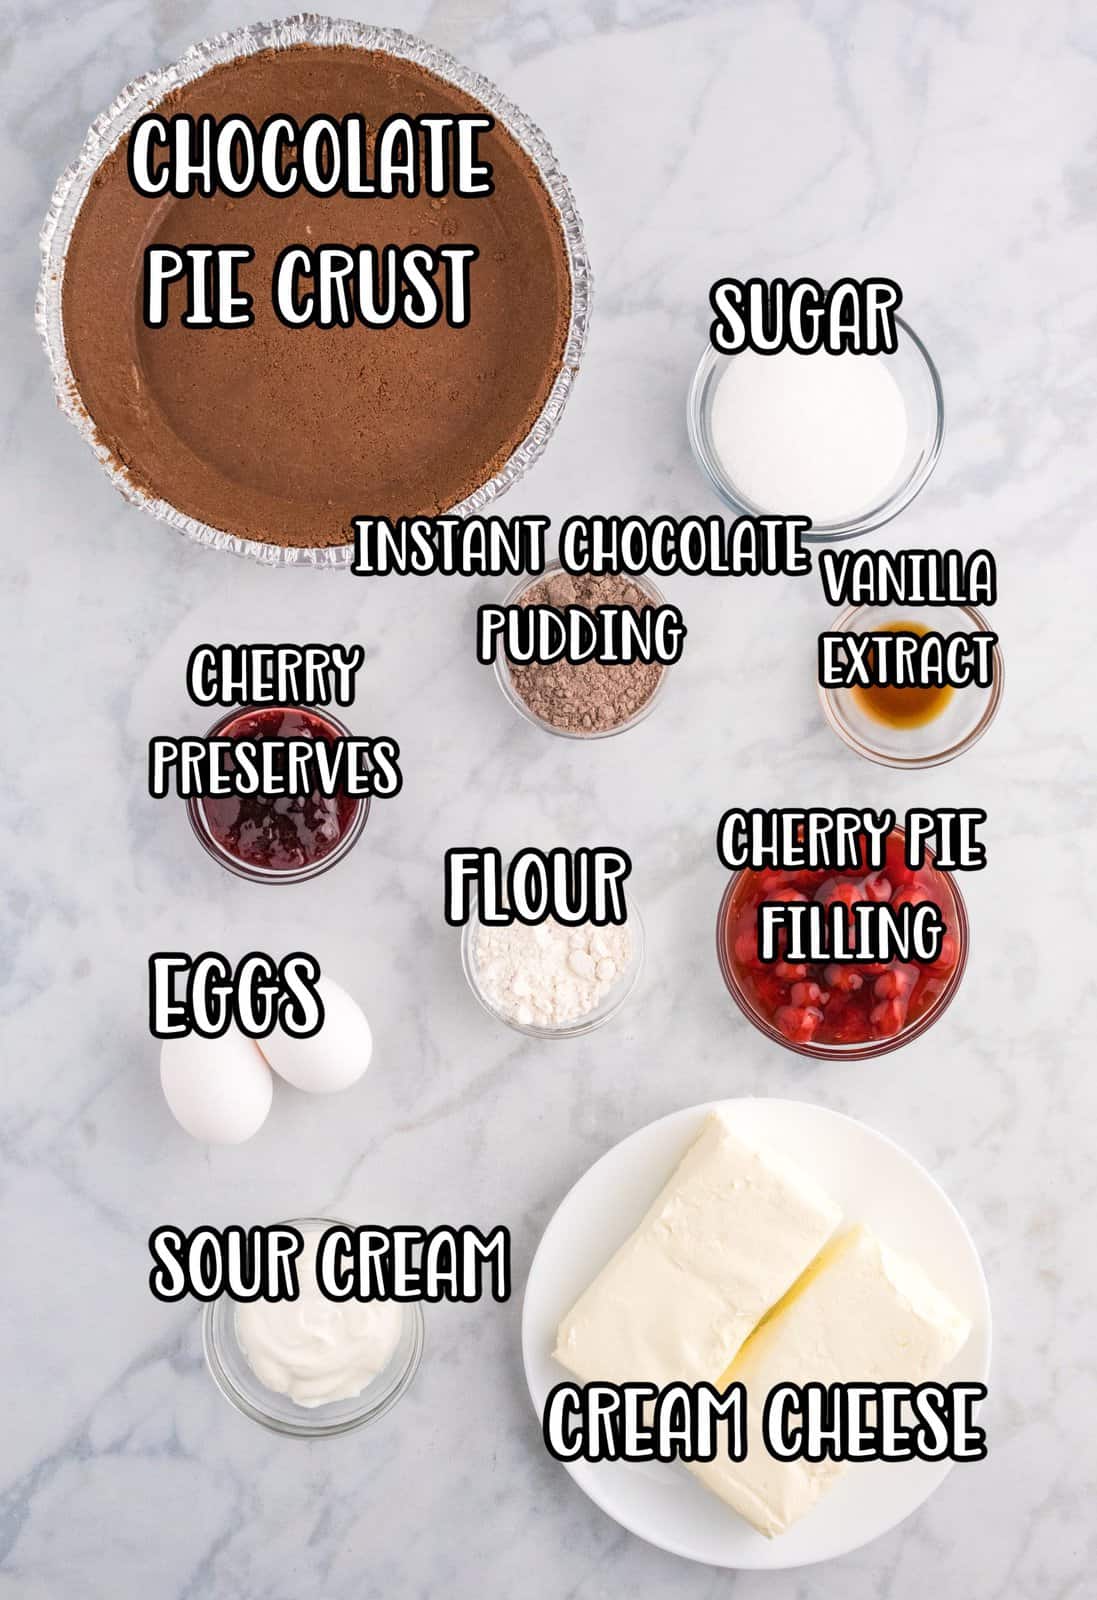 Chocolate pie crust, sour cream, cream cheese, sugar, eggs, flour, vanilla extract, chocolate pudding mix, cherry preserves, and cherry pie filling.